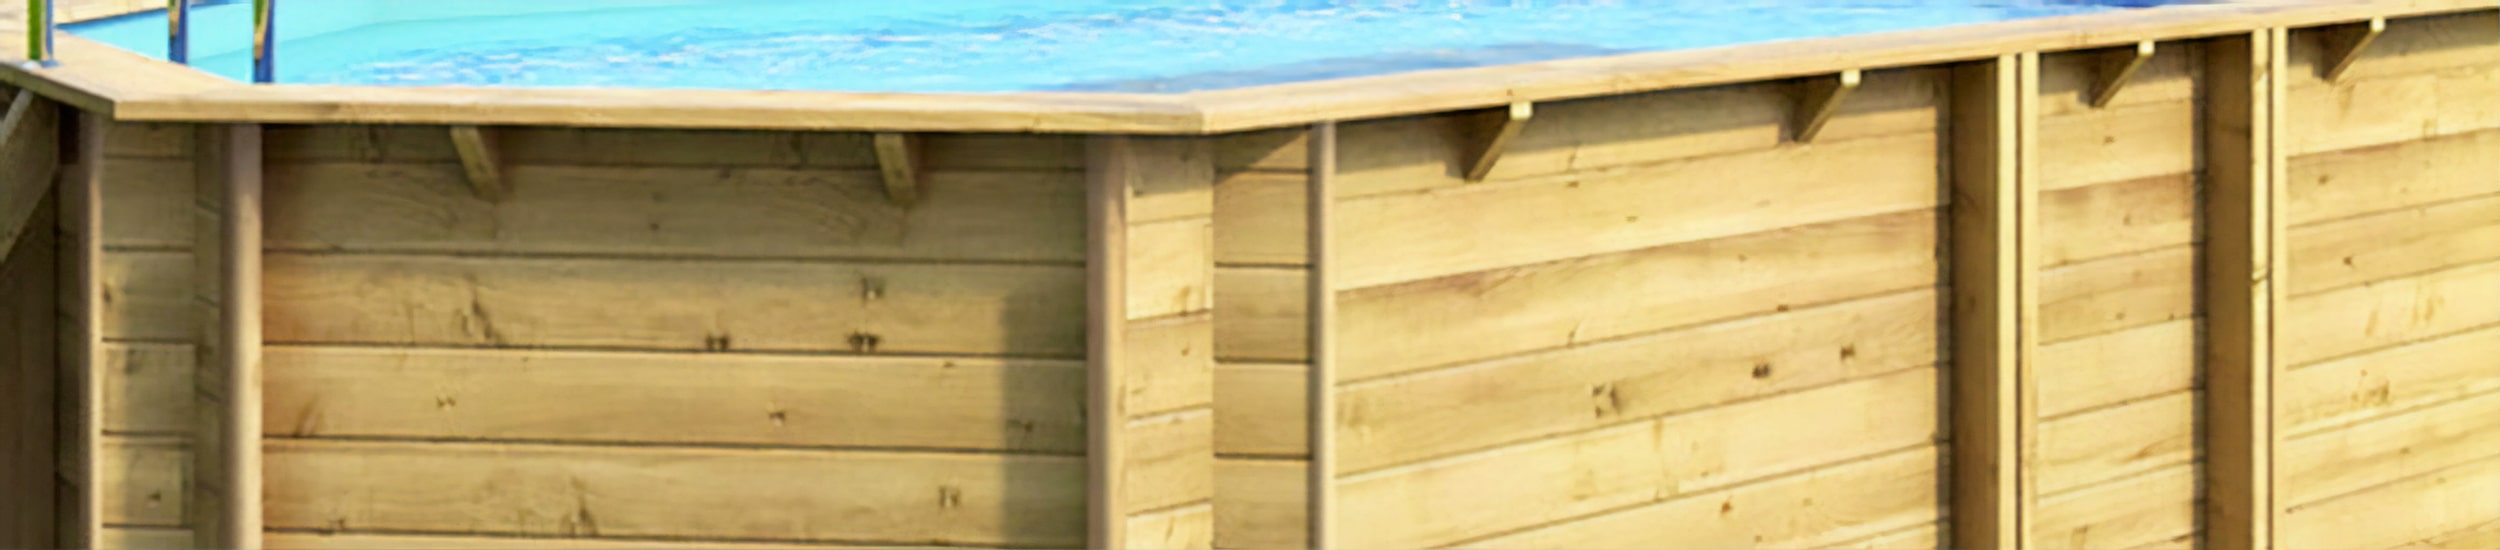 Piscine en bois rectangulaire Pool’n Box 6,2 x 2,5 M – H 133 cm – PROCOPI BWT MyPool